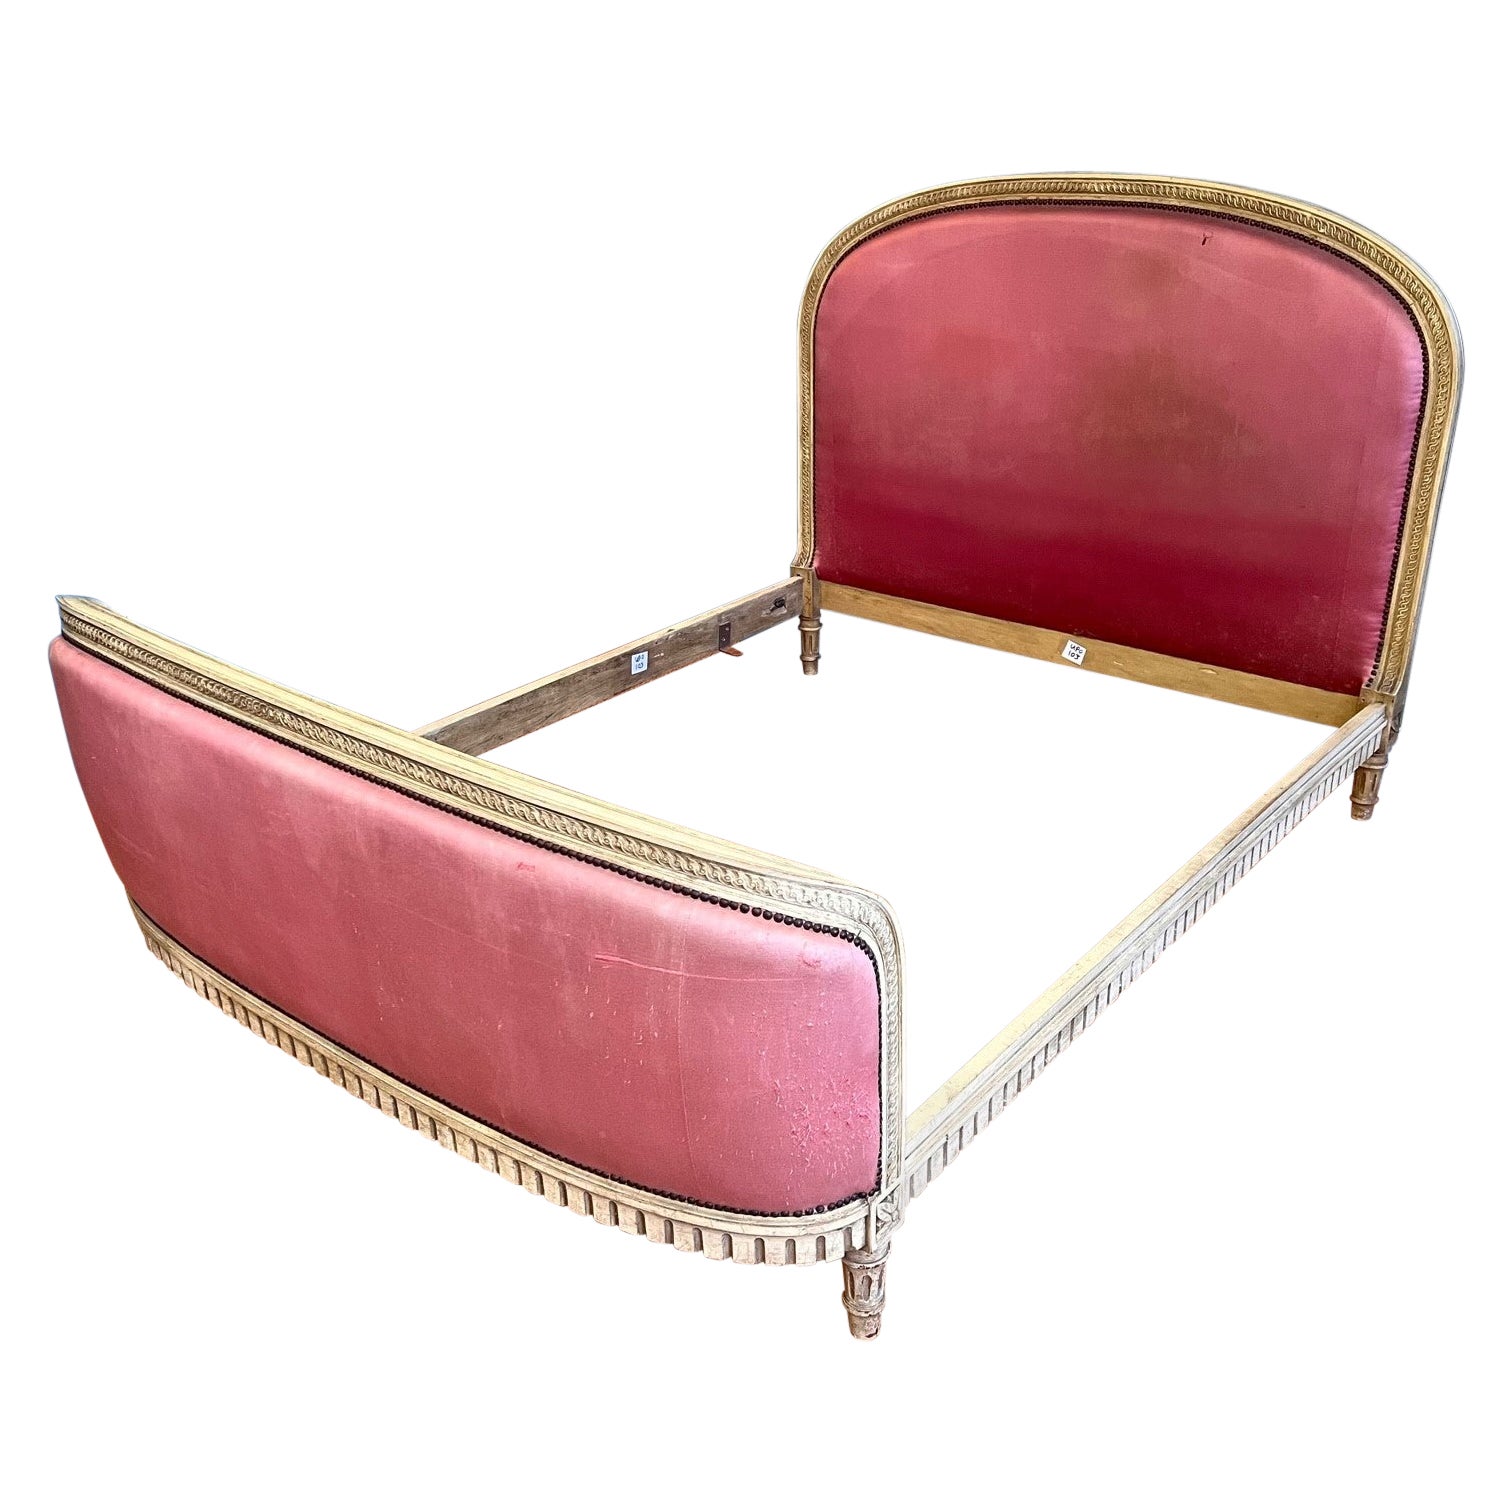 King size 5', Vintage French Upholstered Bed